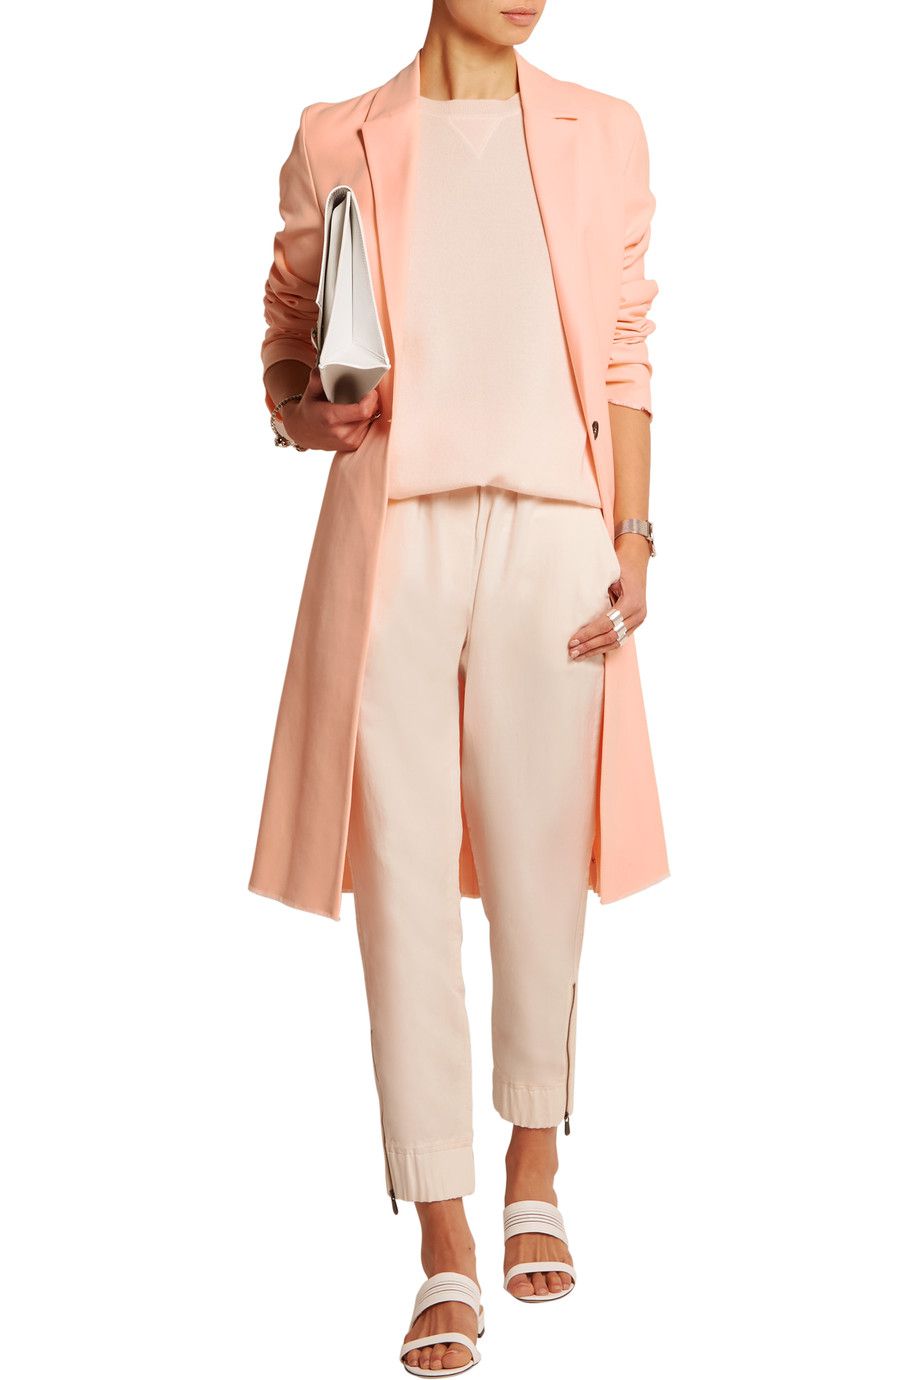 A model in a pink crepe coat